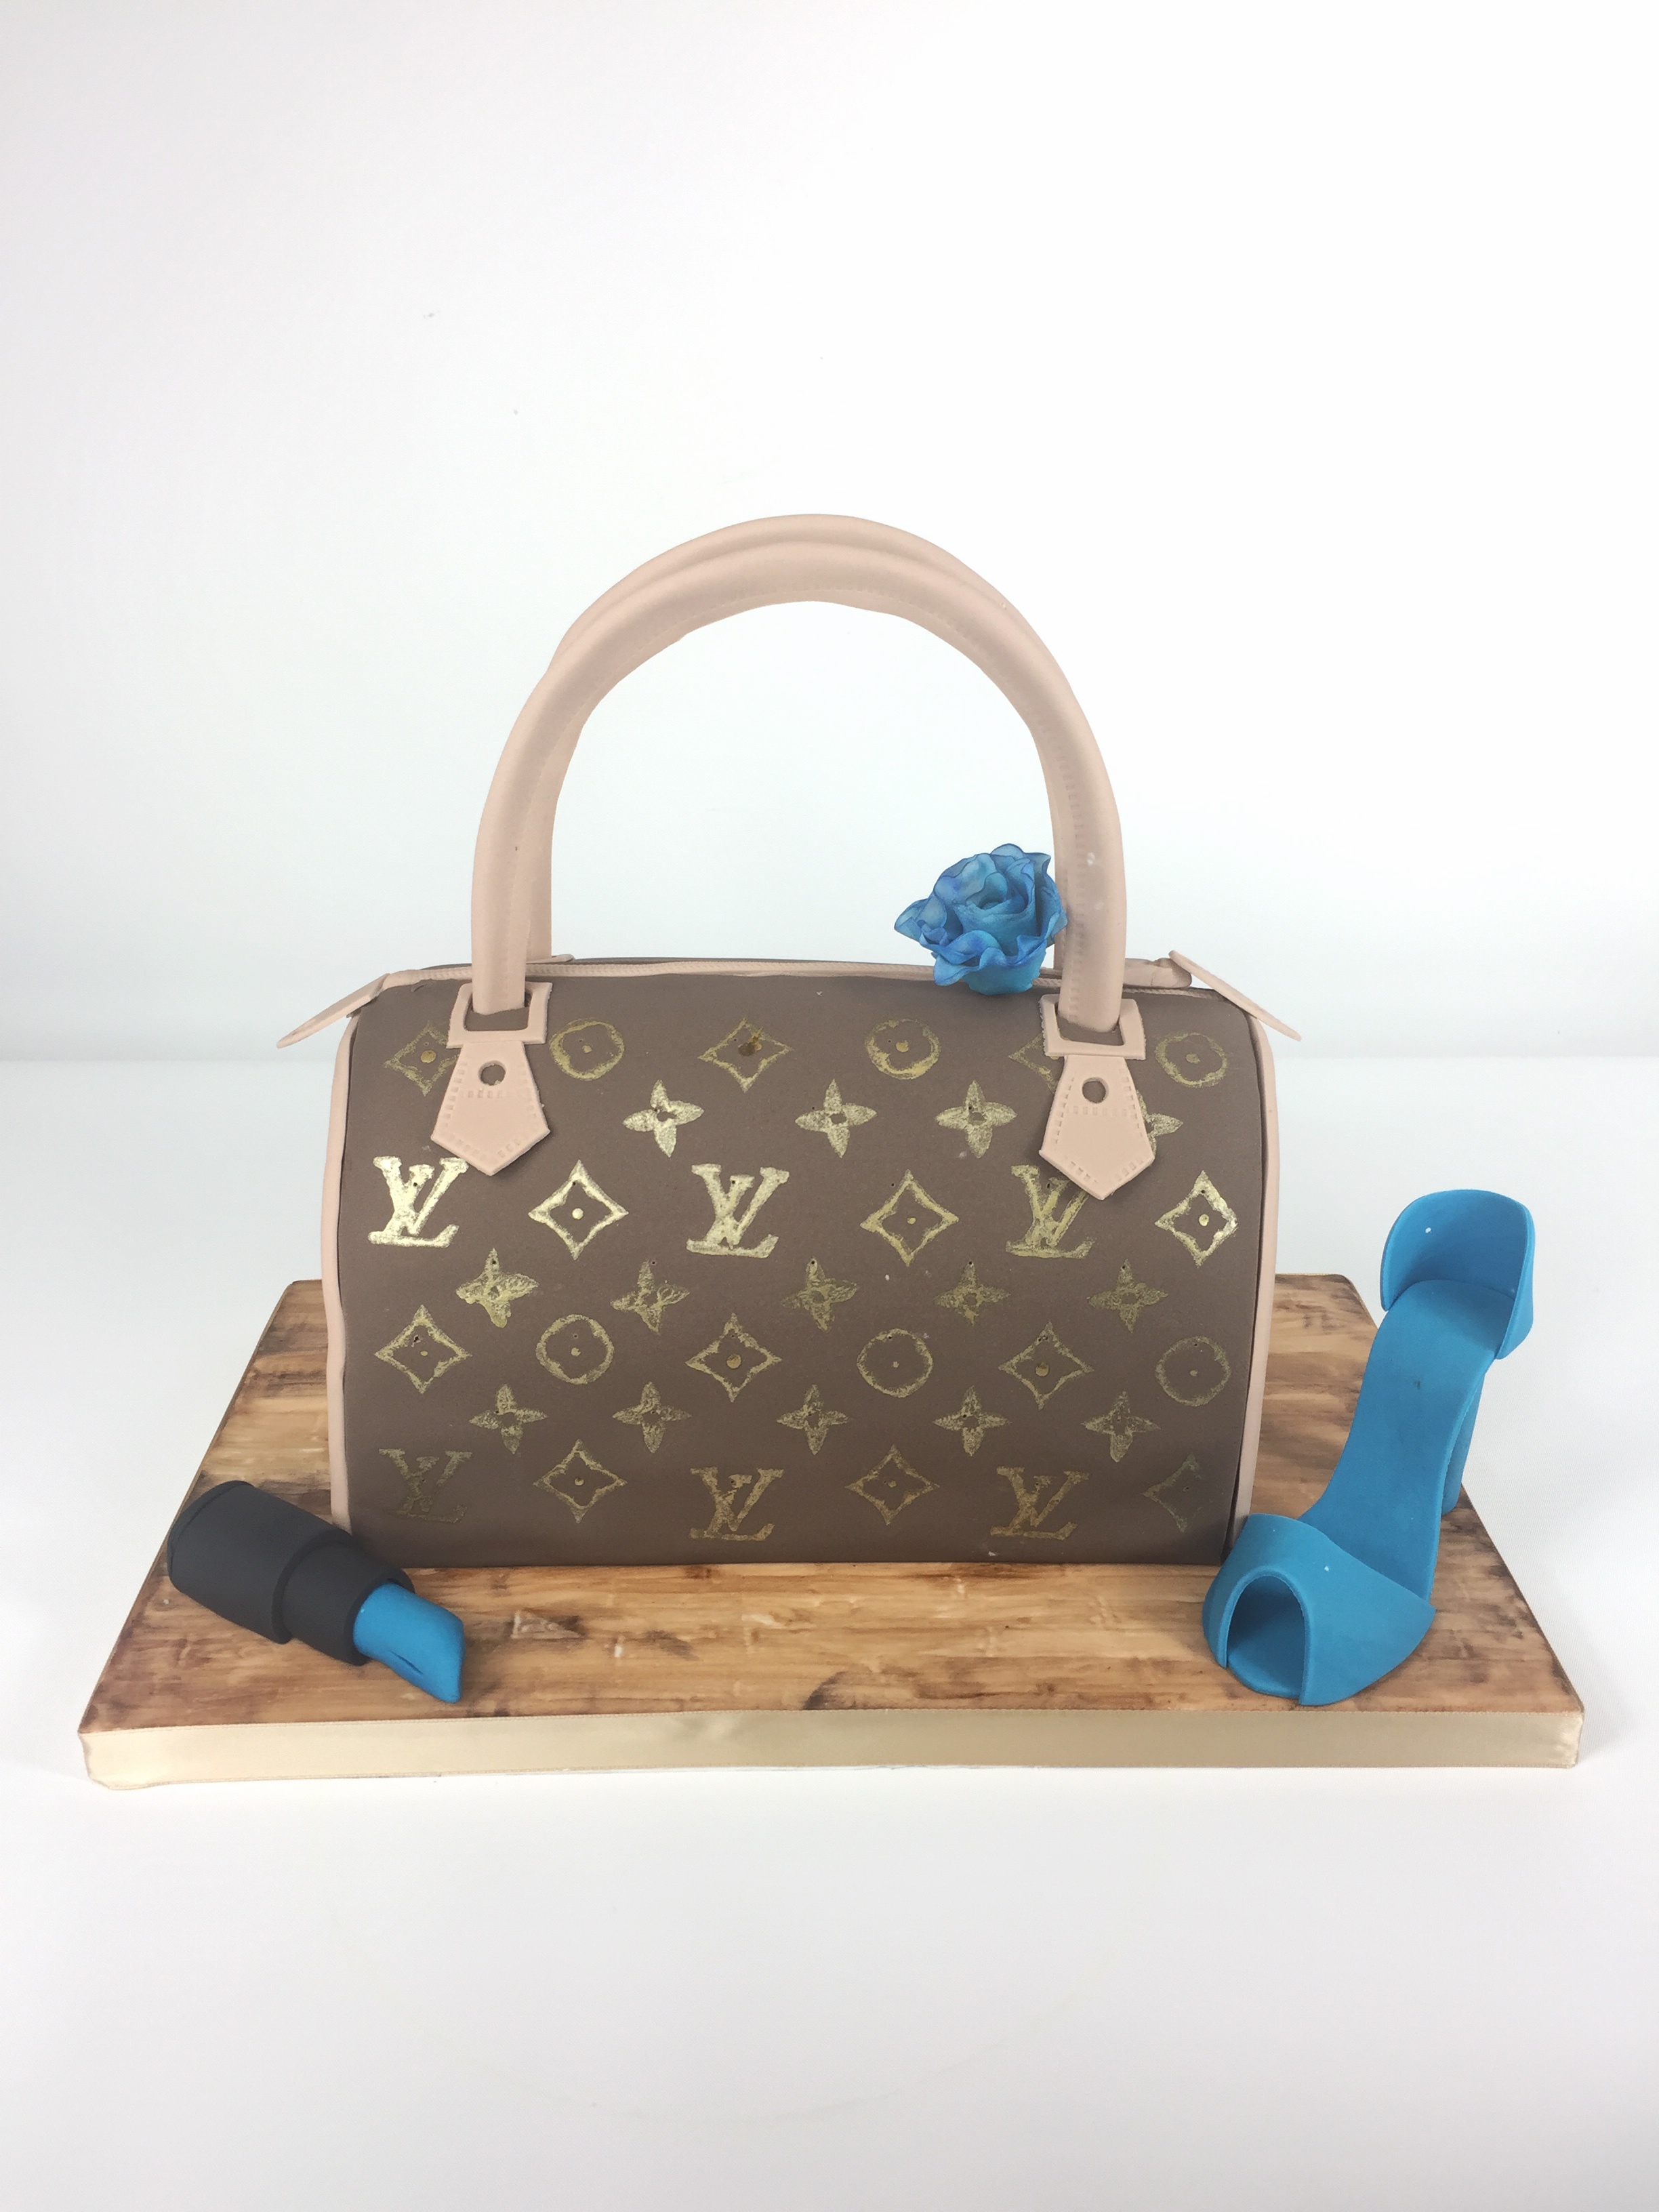 Louis Vuitton ladies handbag Birthday Cake in brown